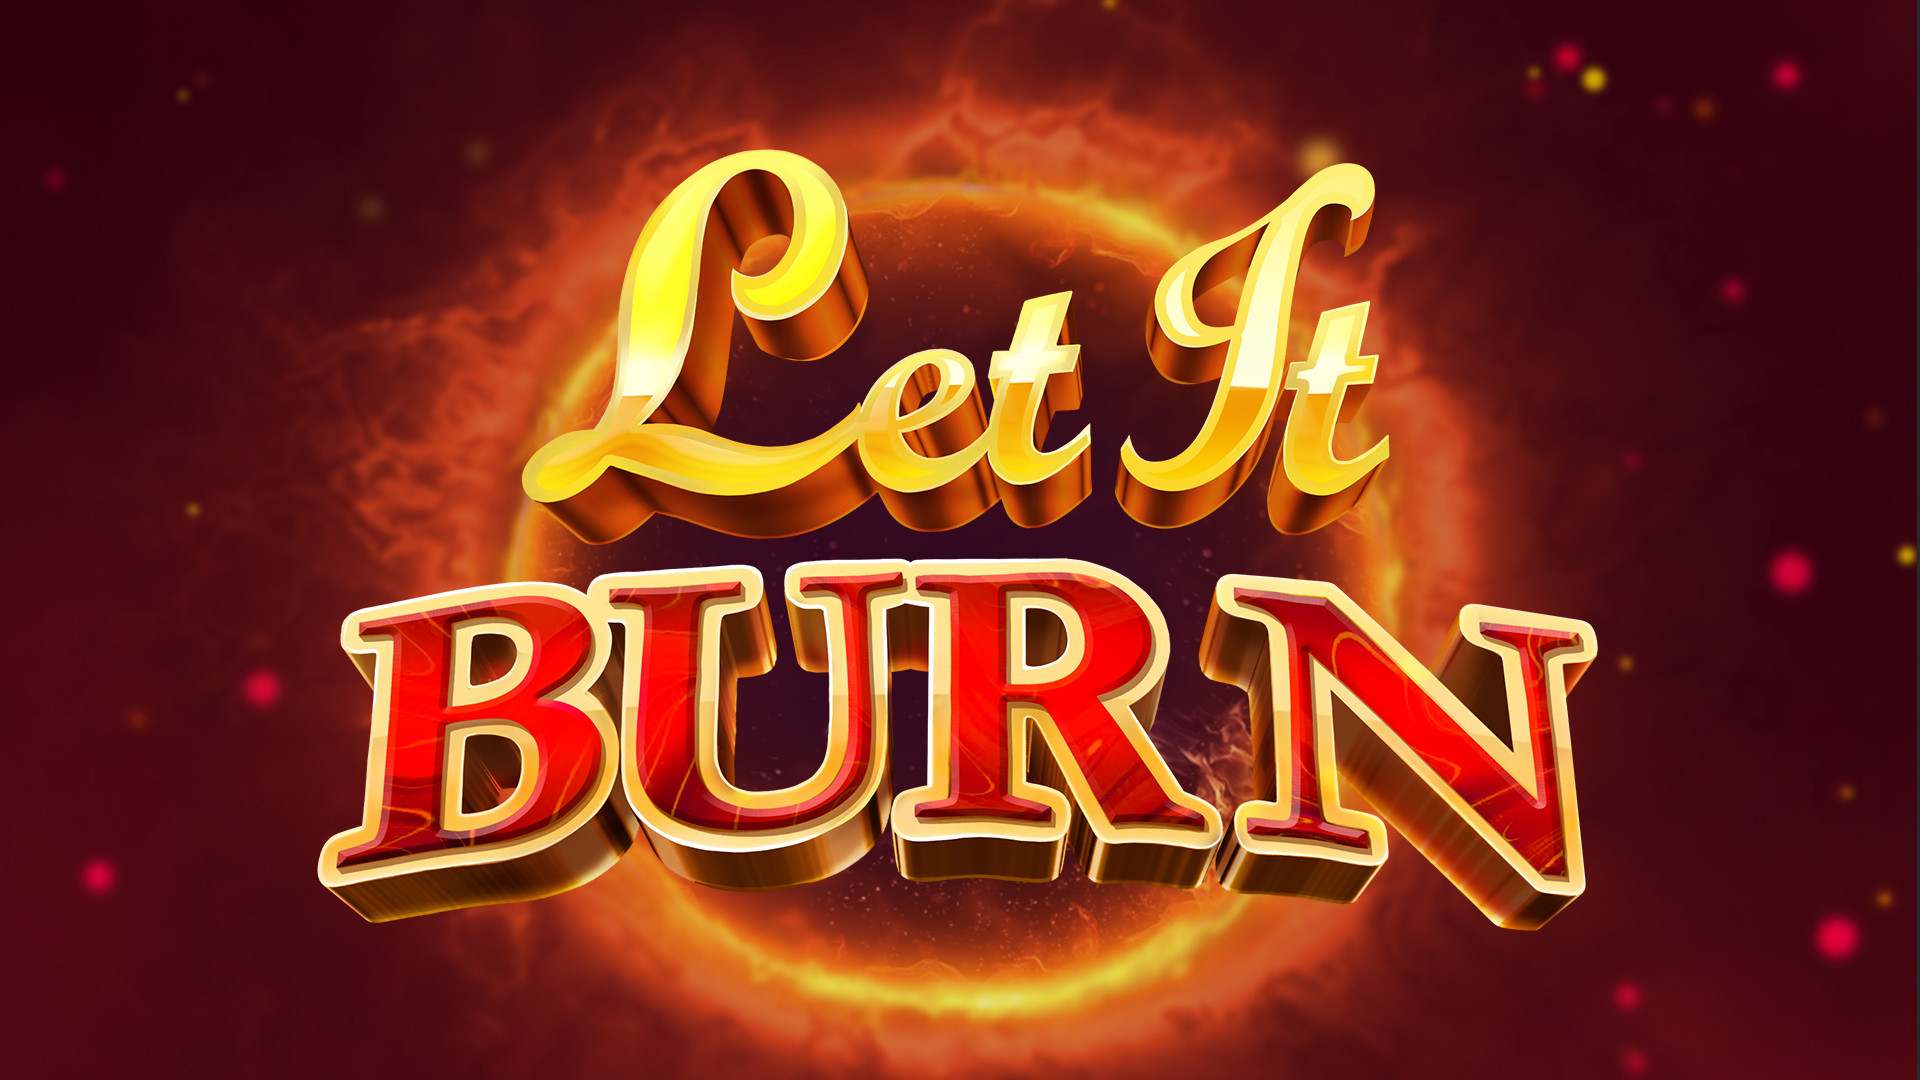 Let it burn